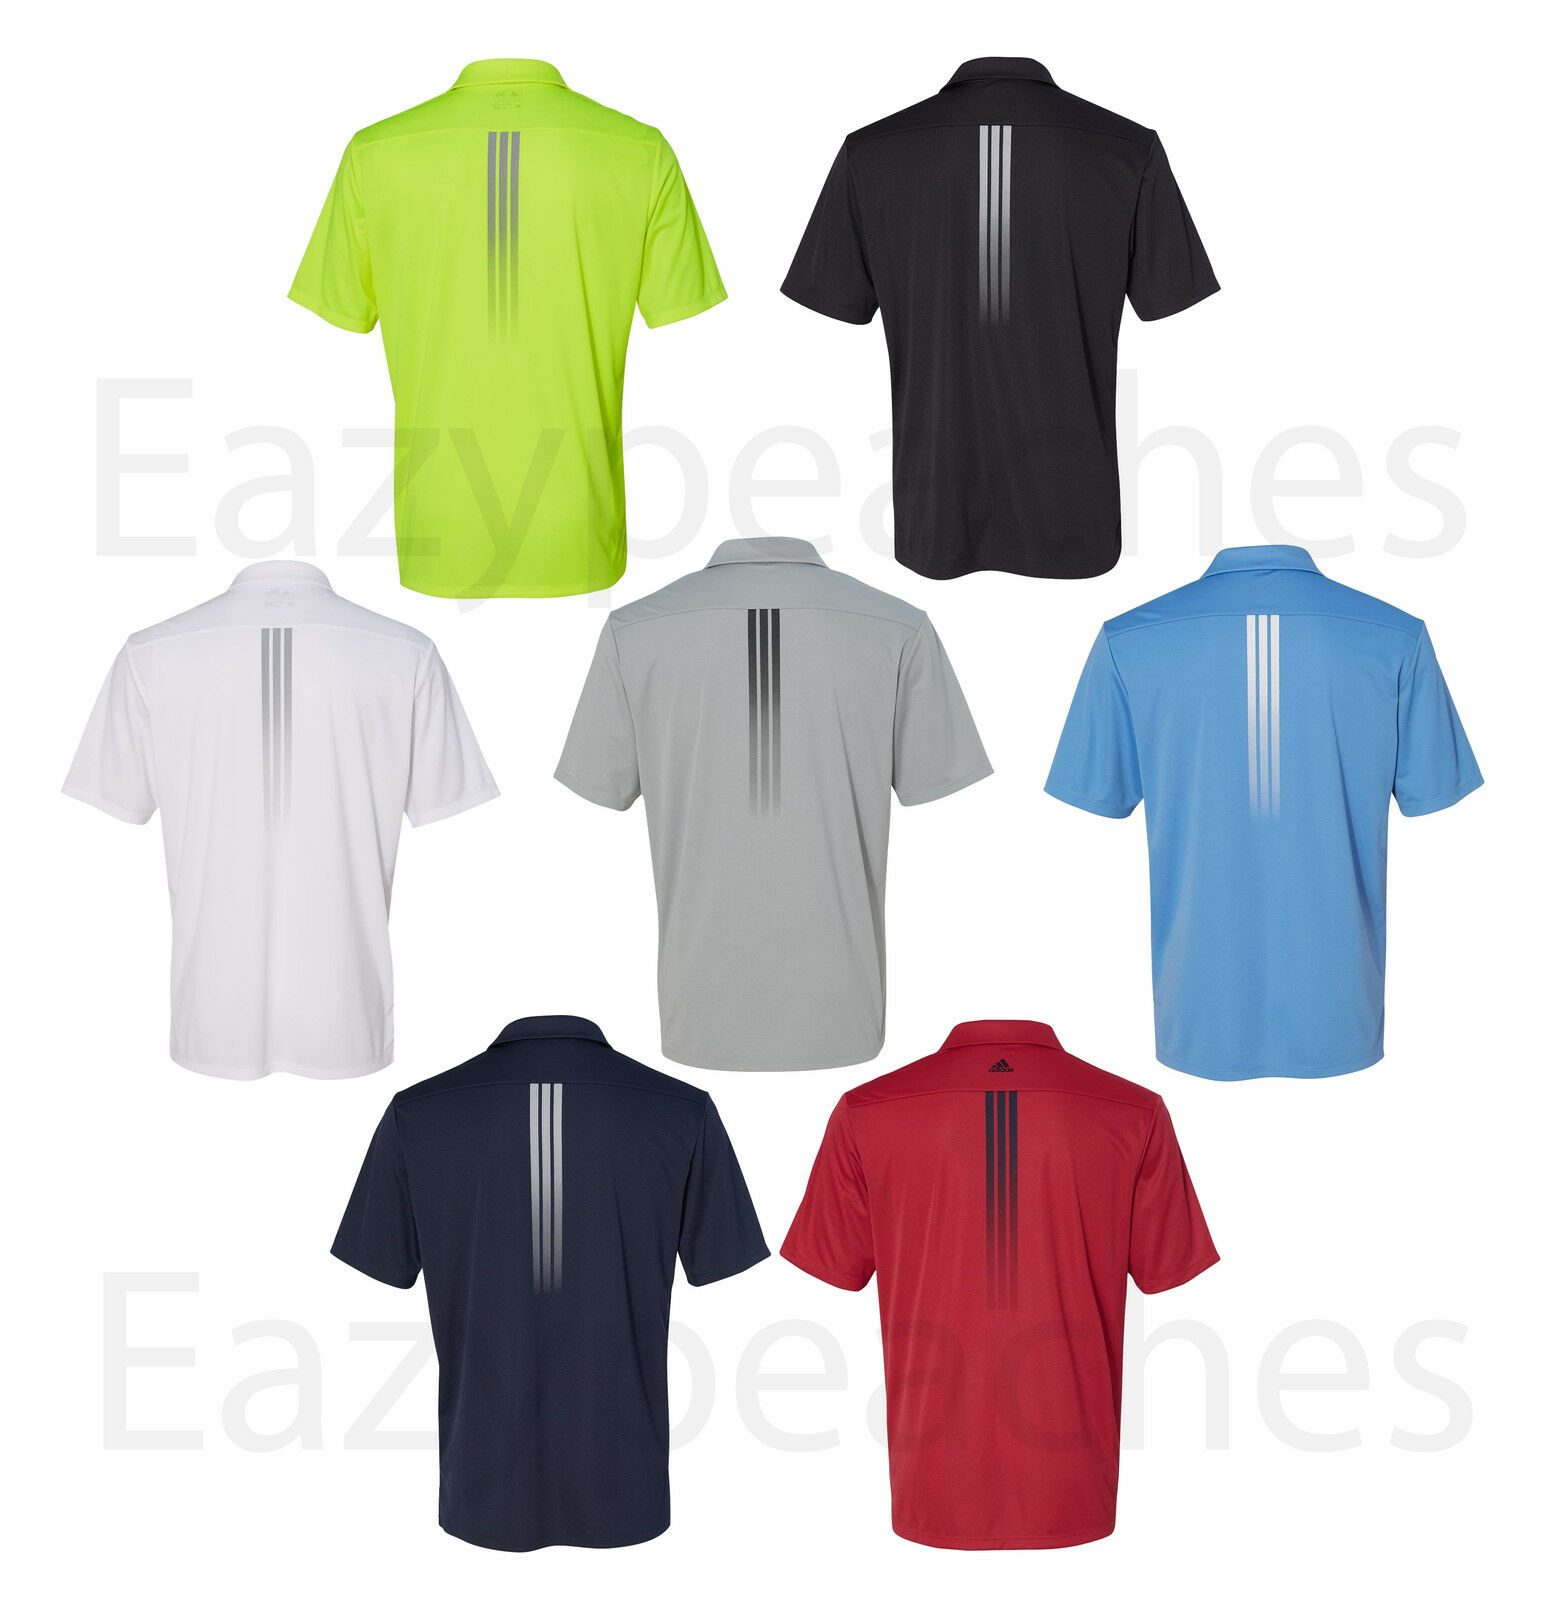 Adidas Golf - Gradient 3-stripes Polo, Mens Sizes S-3xl, Climalite Sport Shirt